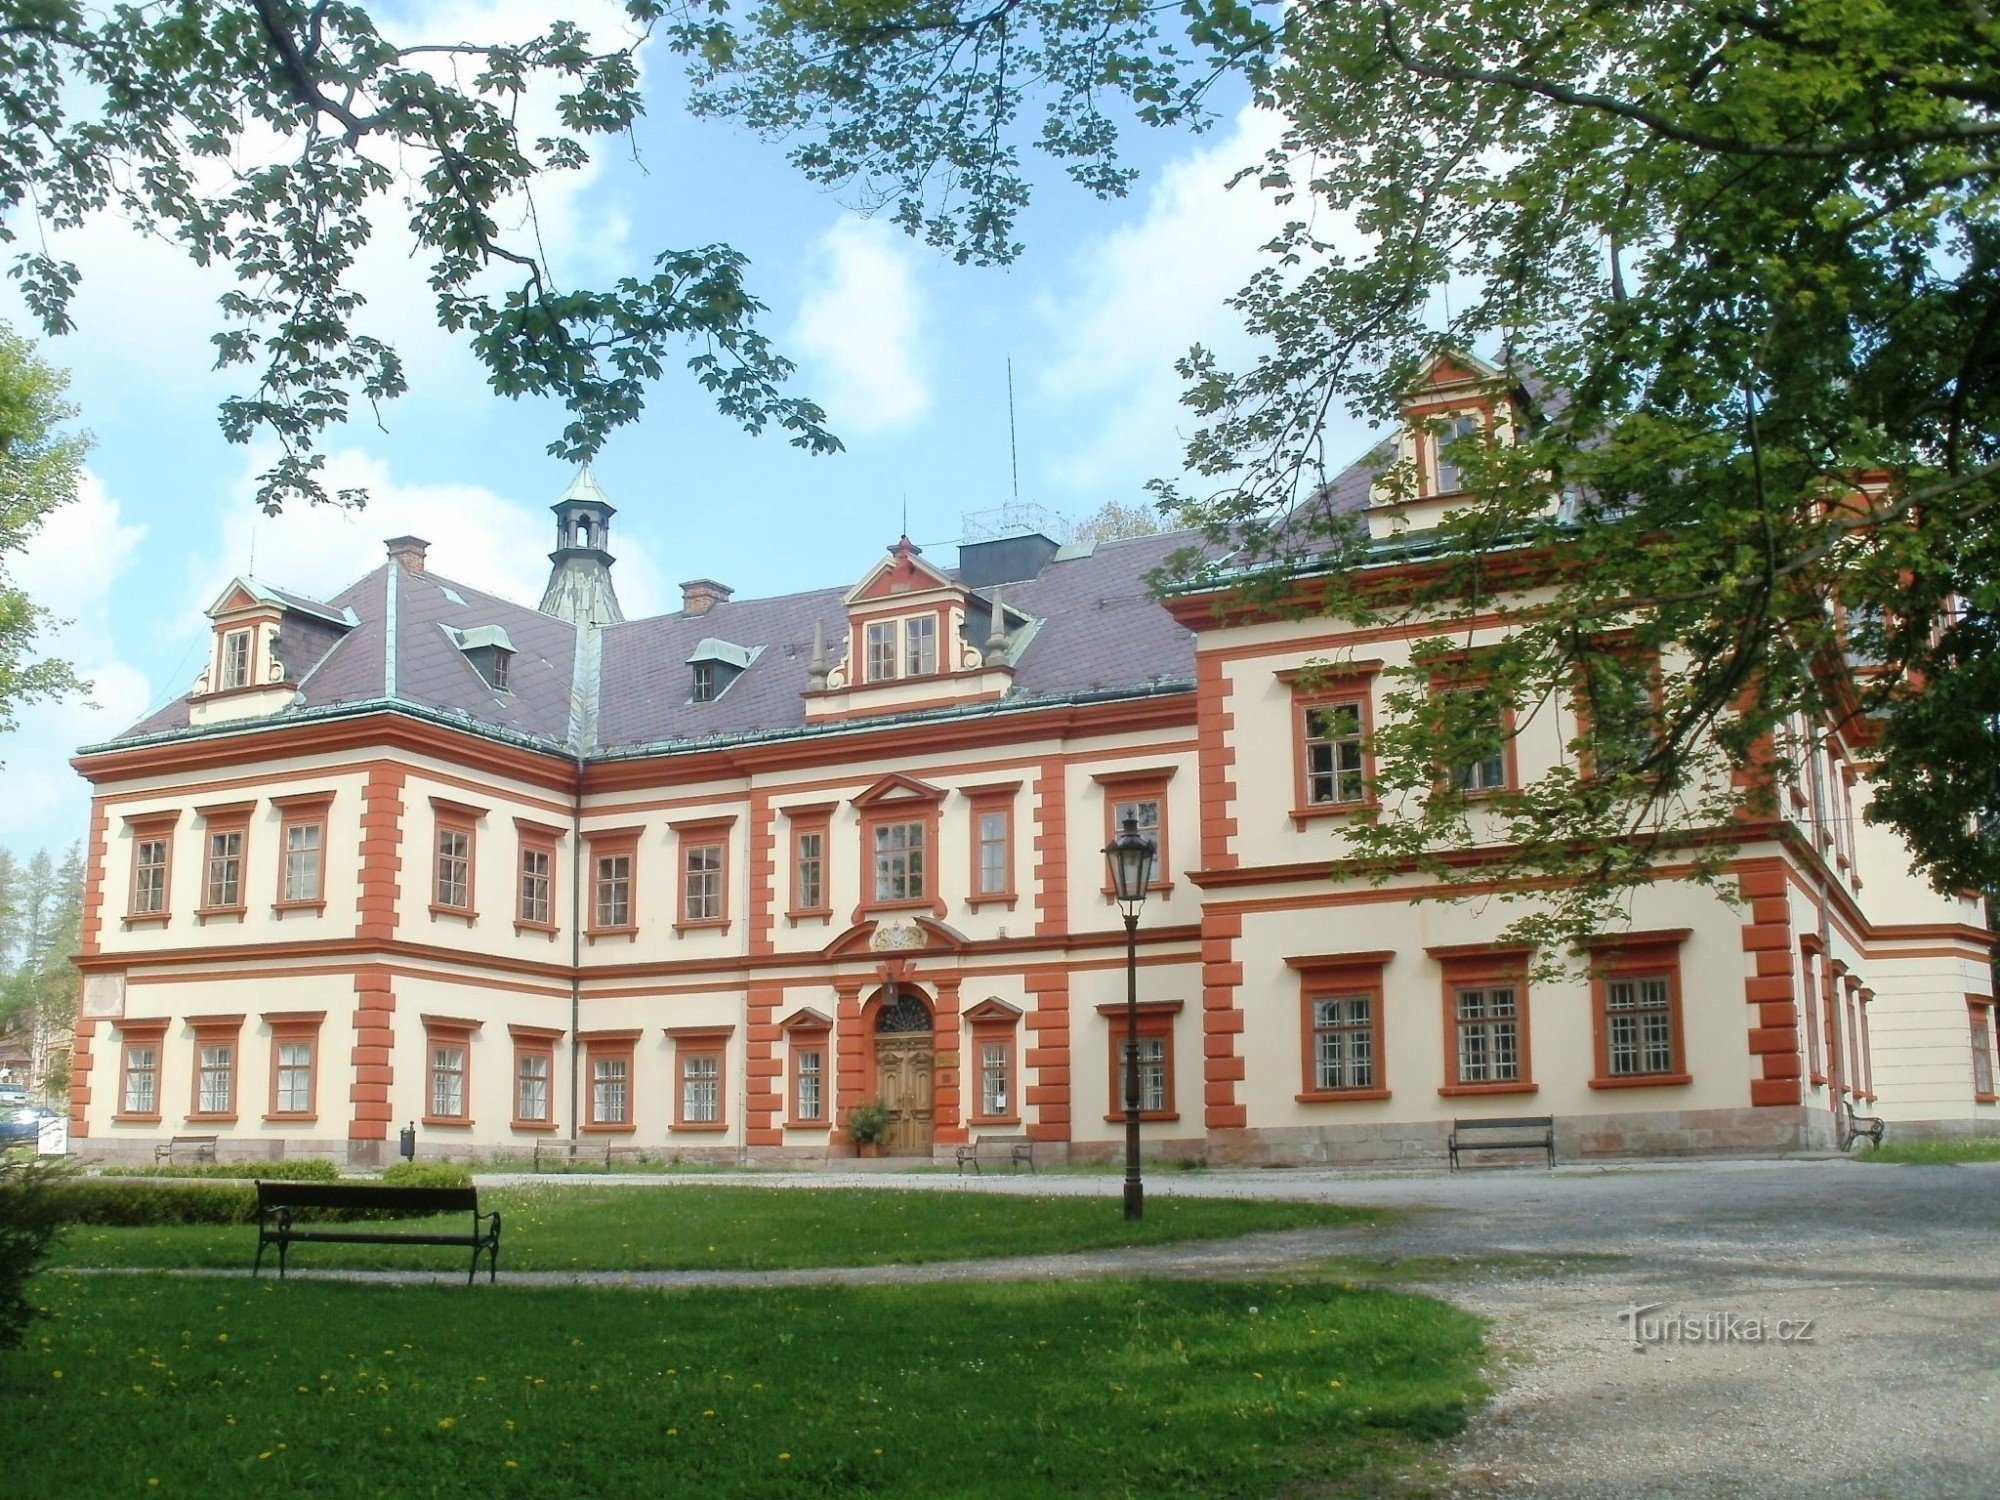 Jilemnice - Krkonoše museum, castle